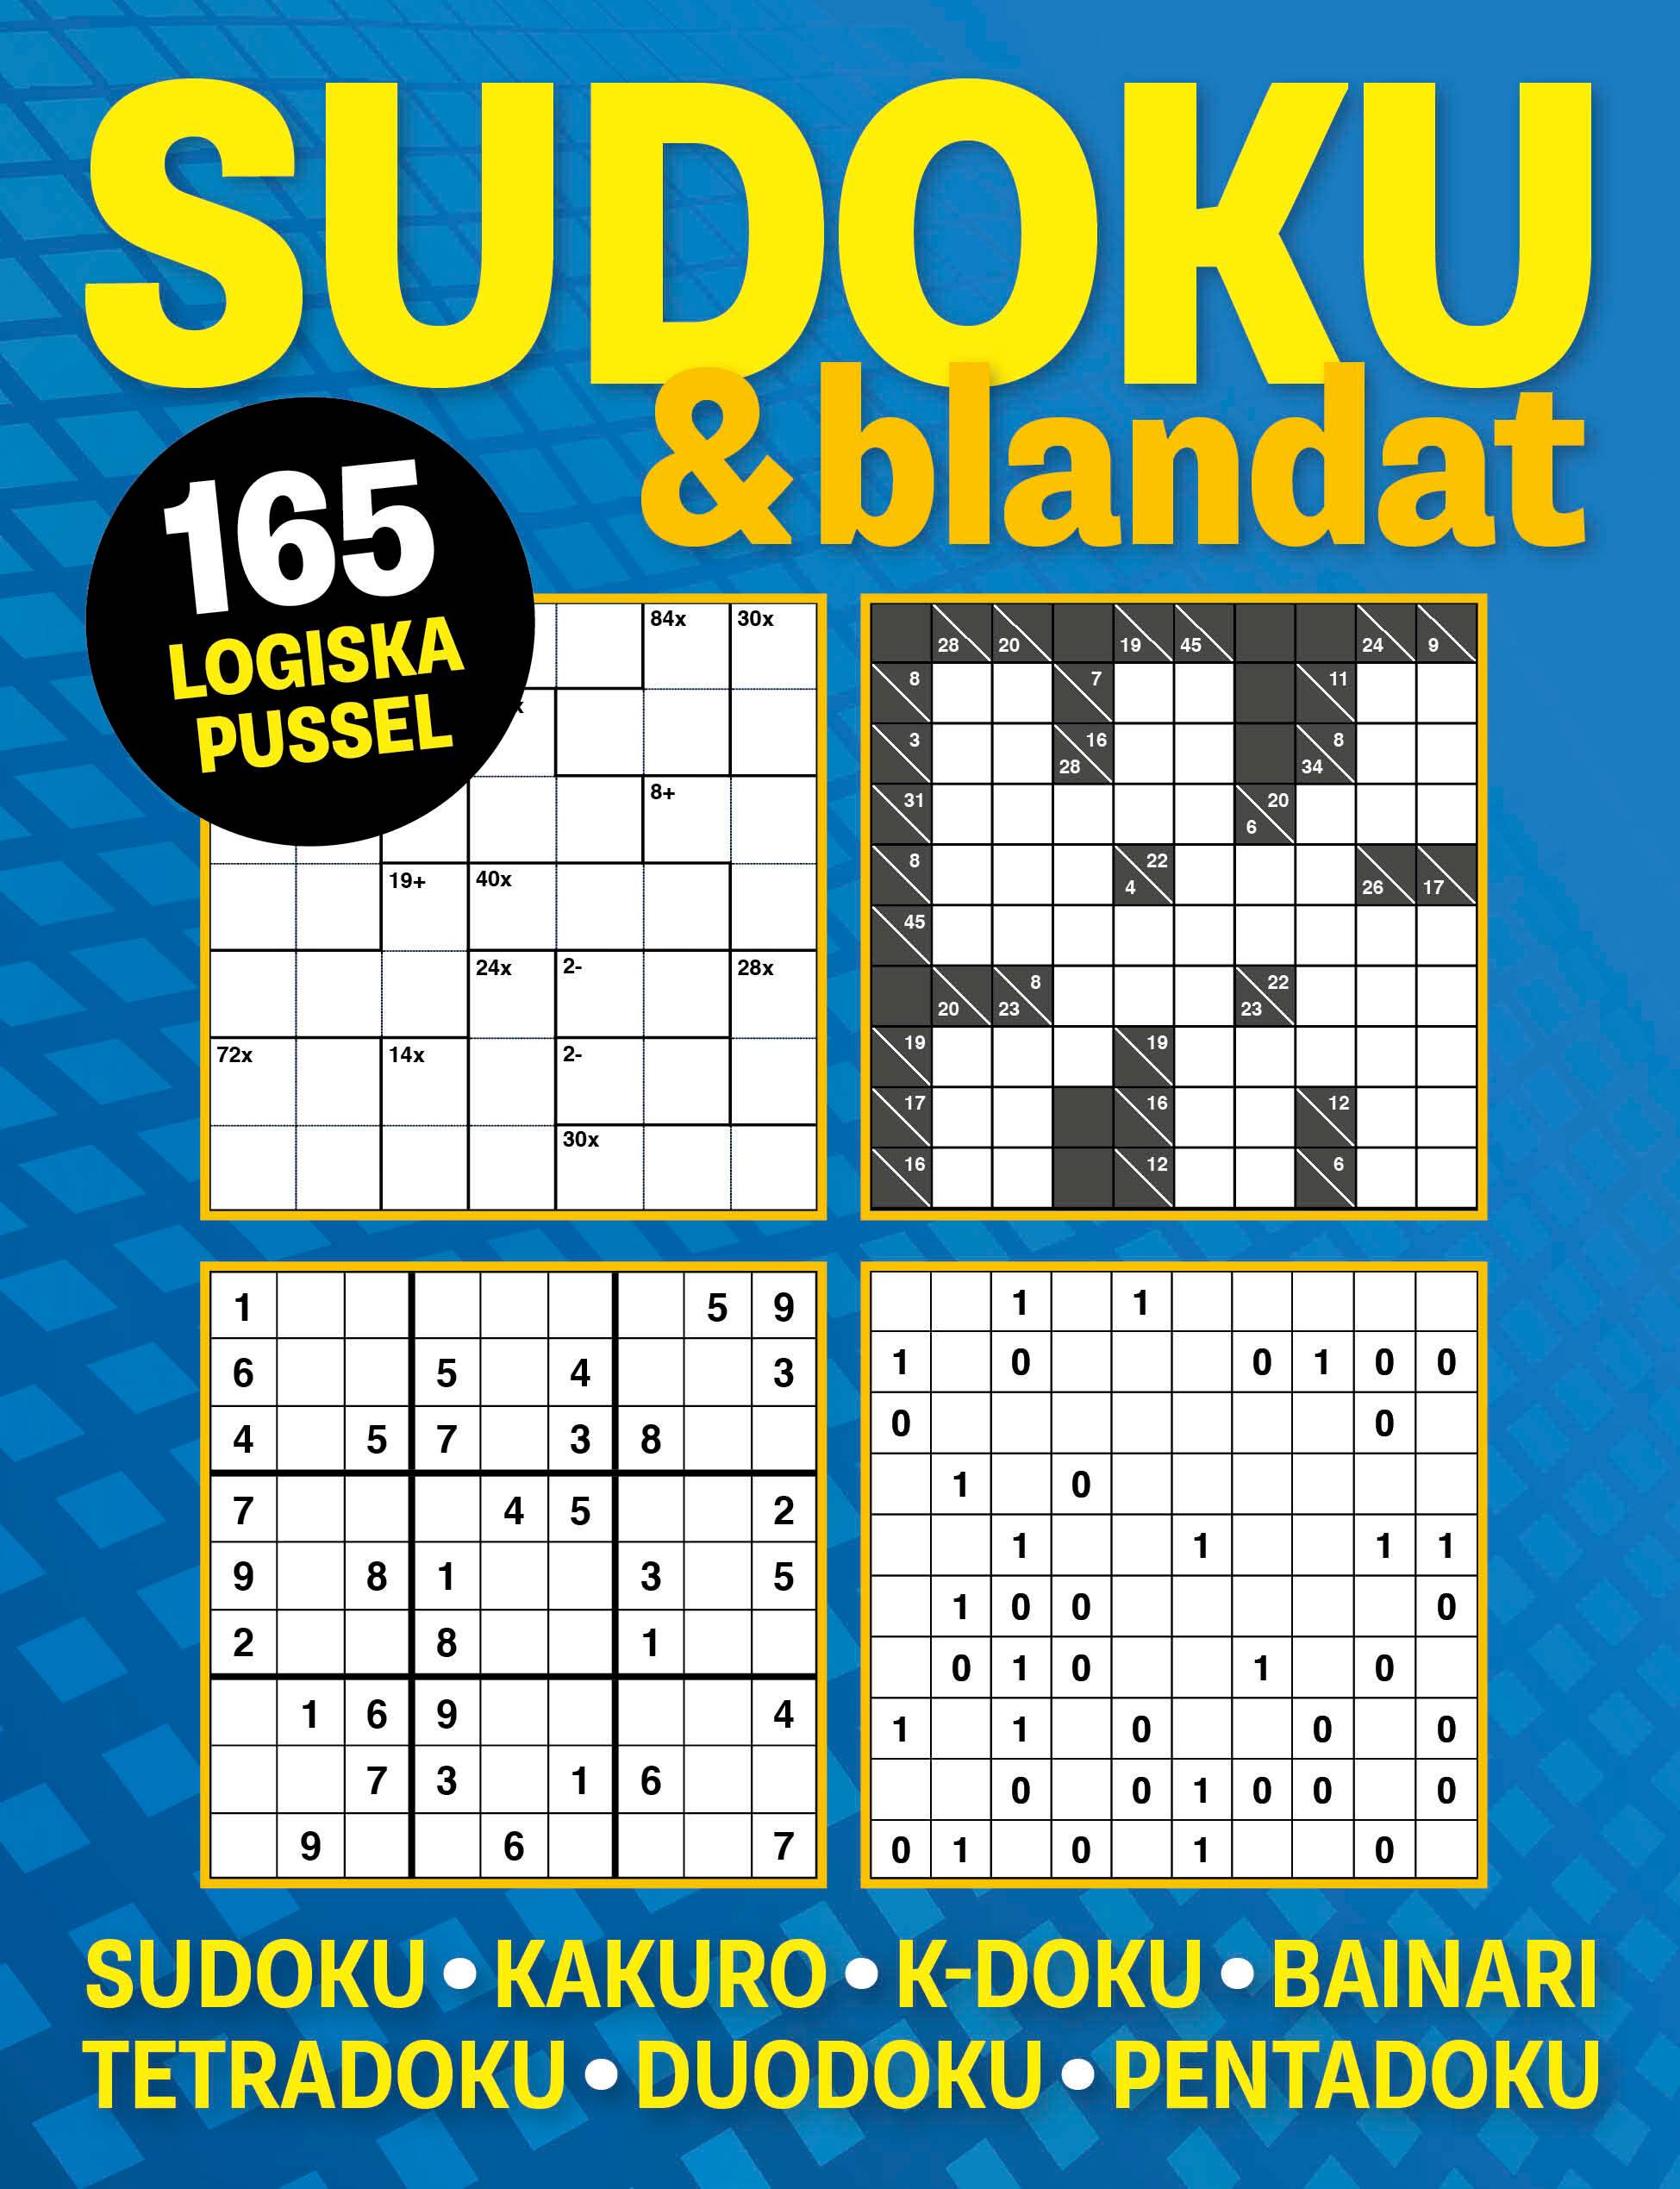 Sudoku & blandat : 197 logiska pussel med sudoku, kakuro, k-duko, bainari,